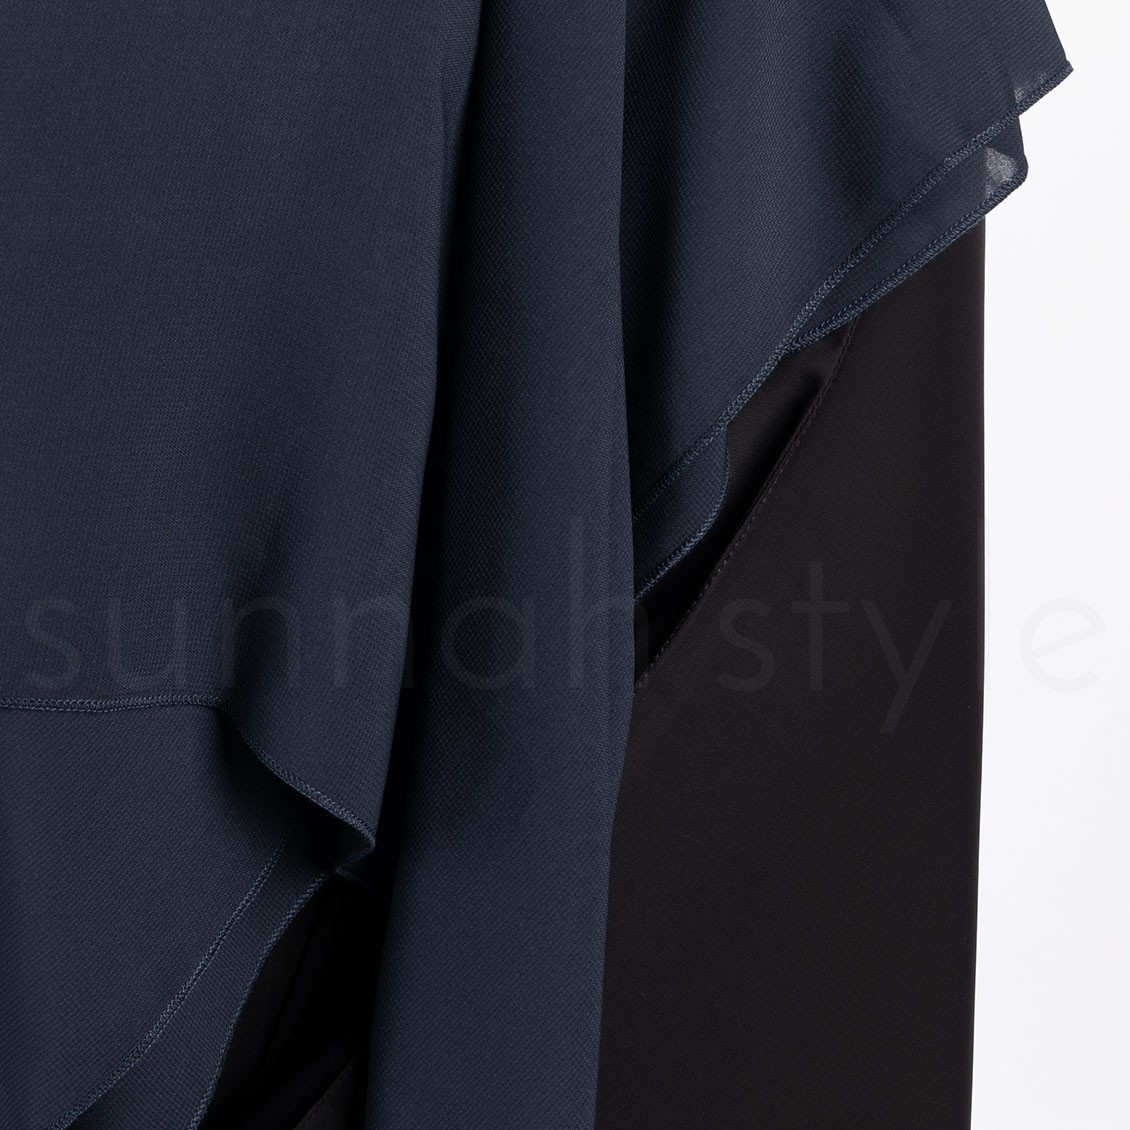 Sunnah Style Essentials Square Hijab XL Navy Blue